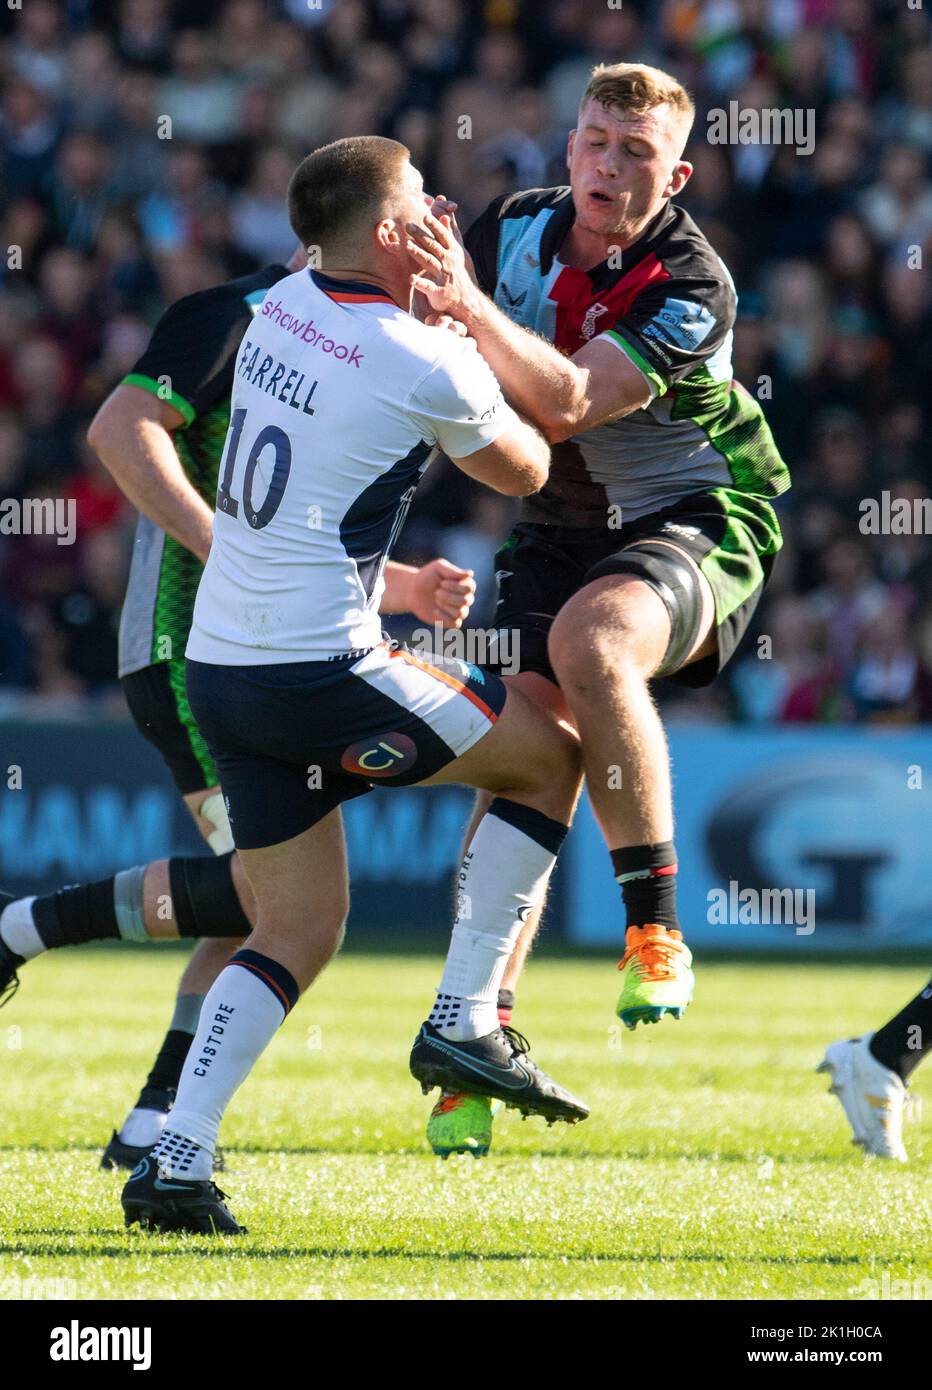 Owen Farrell si scontra con Luke Northmore durante la partita di rugby Gallagher Premiership tra Harlequins e Saracens al Twickenham Stoop Stadium ON Foto Stock